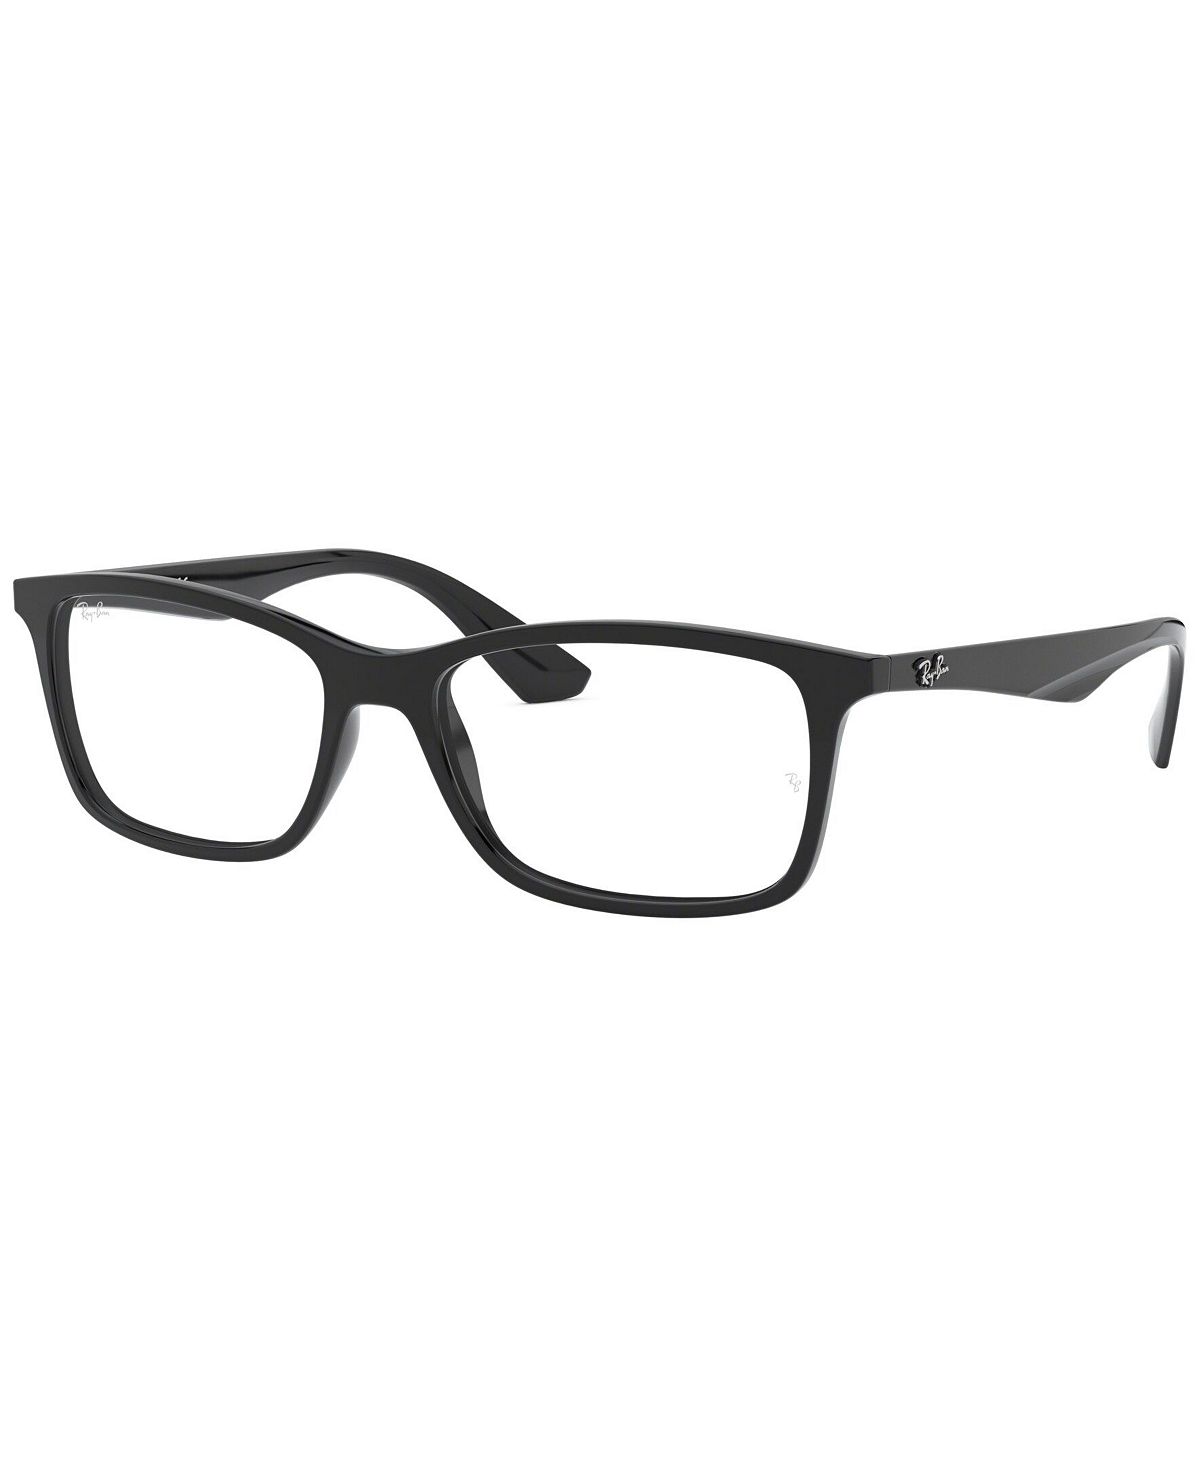 RB7047 Квадратные очки унисекс Ray-Ban black top